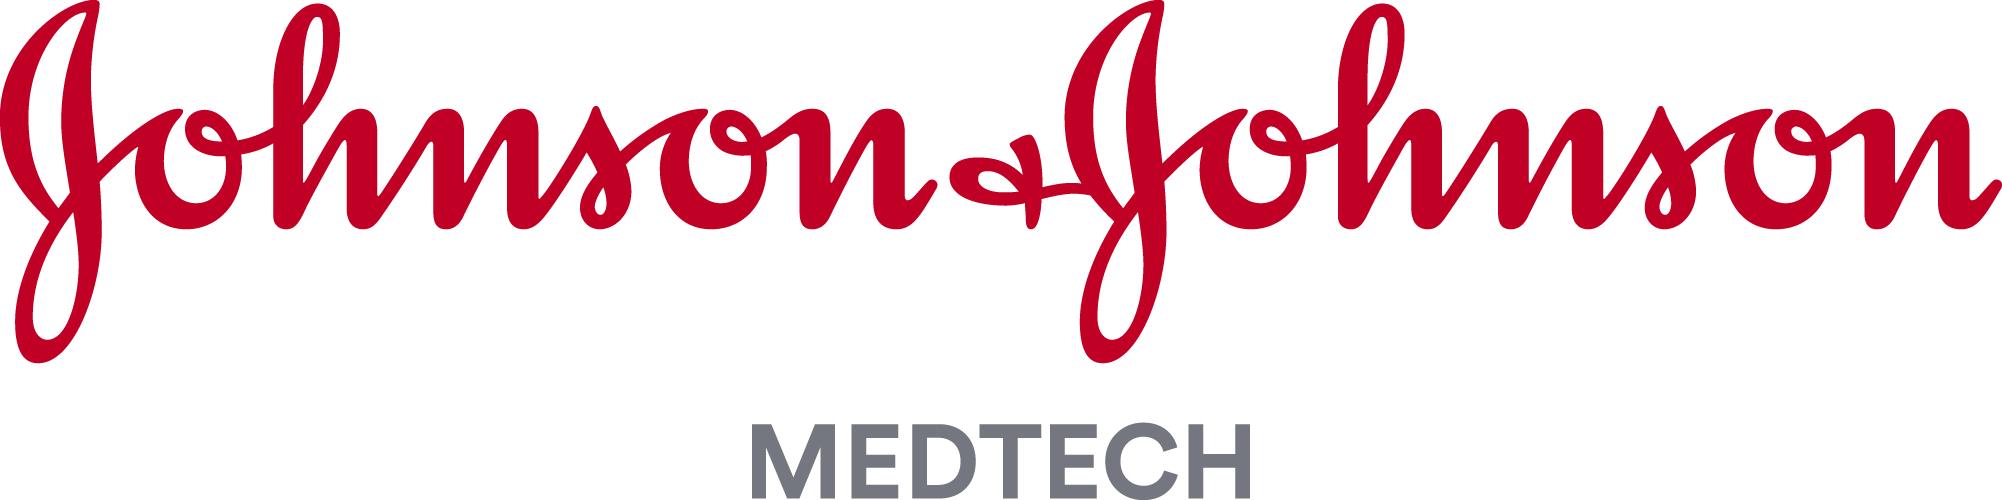 J&J Medtech